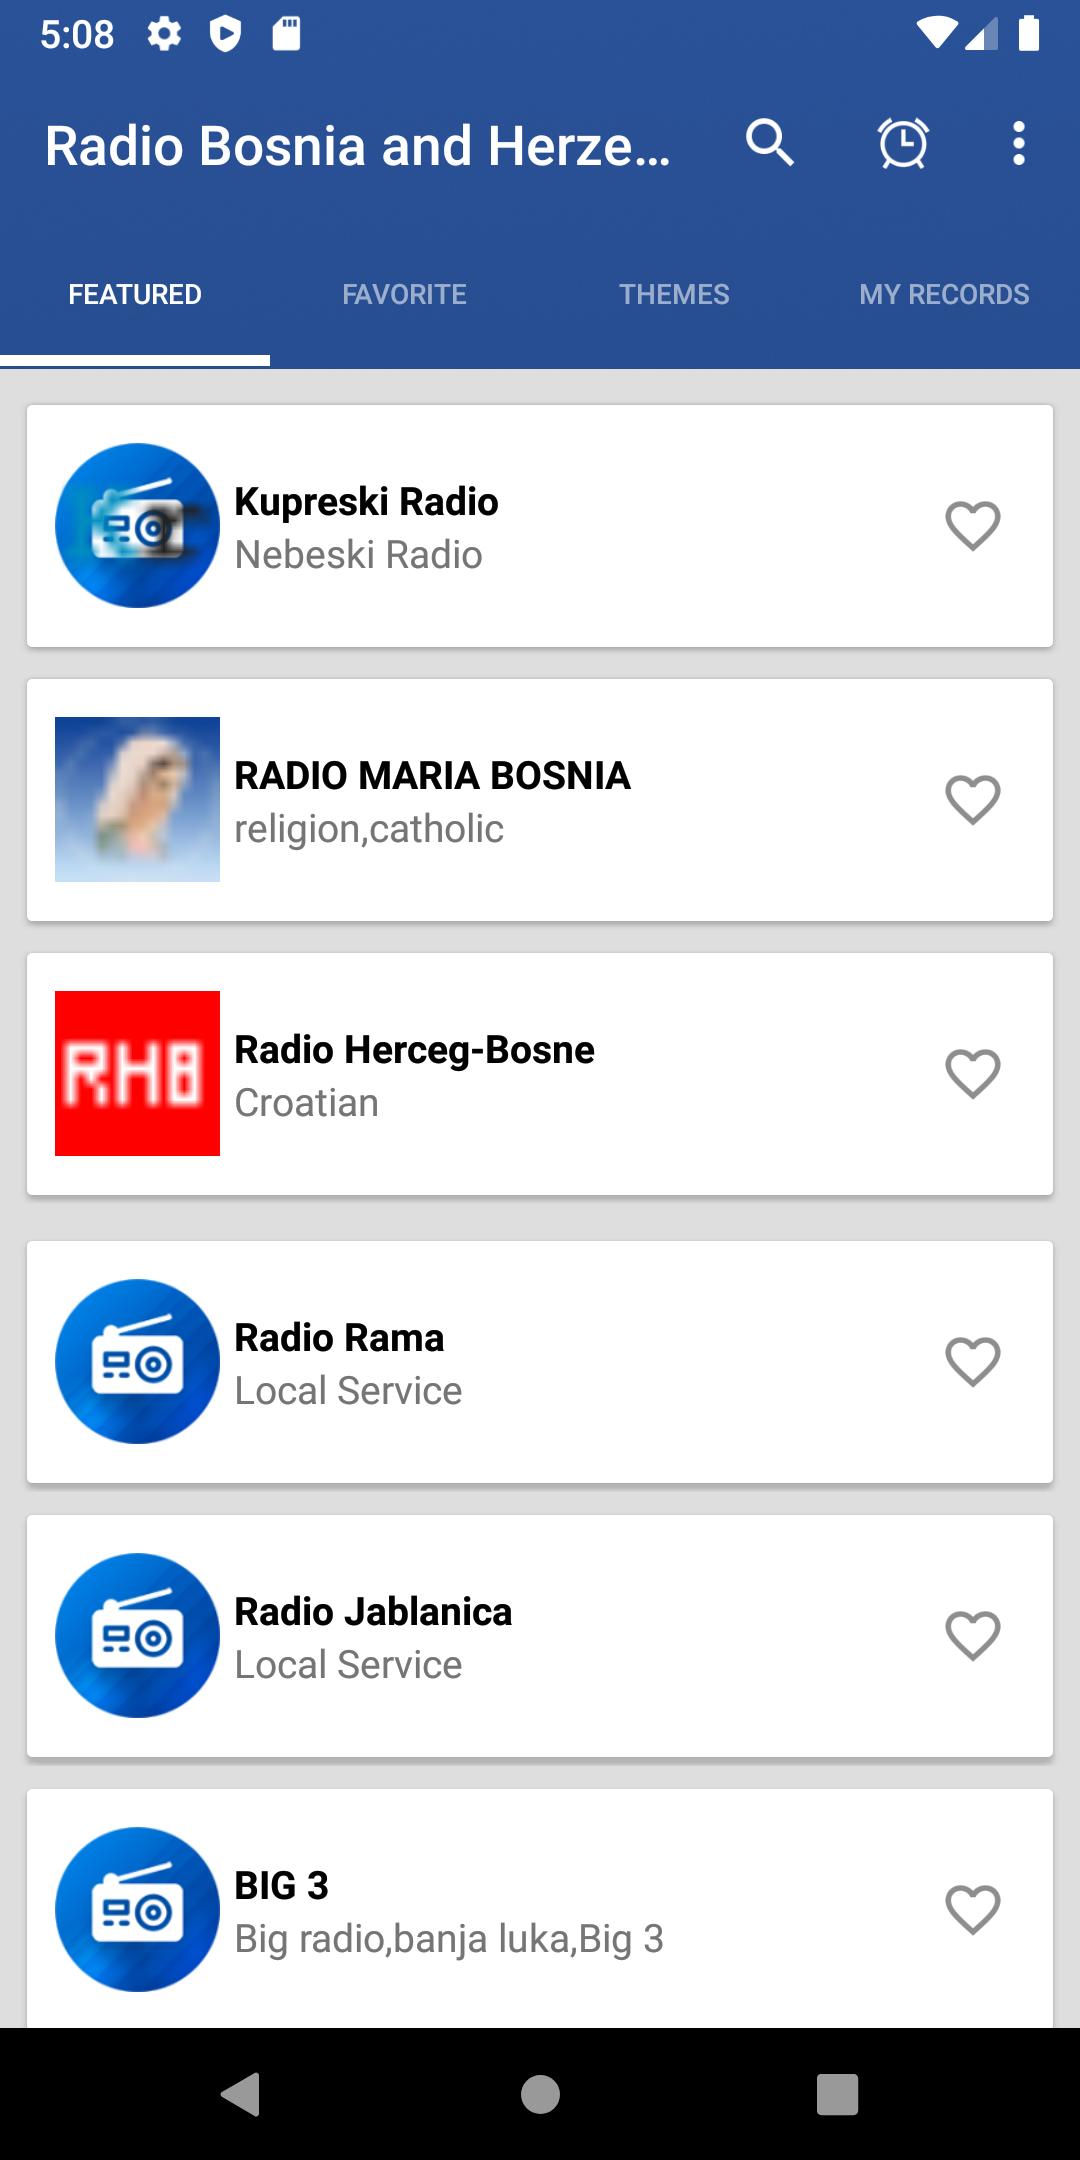 Radio Bosnia & Herzegovina - Radio Online for Android - APK Download